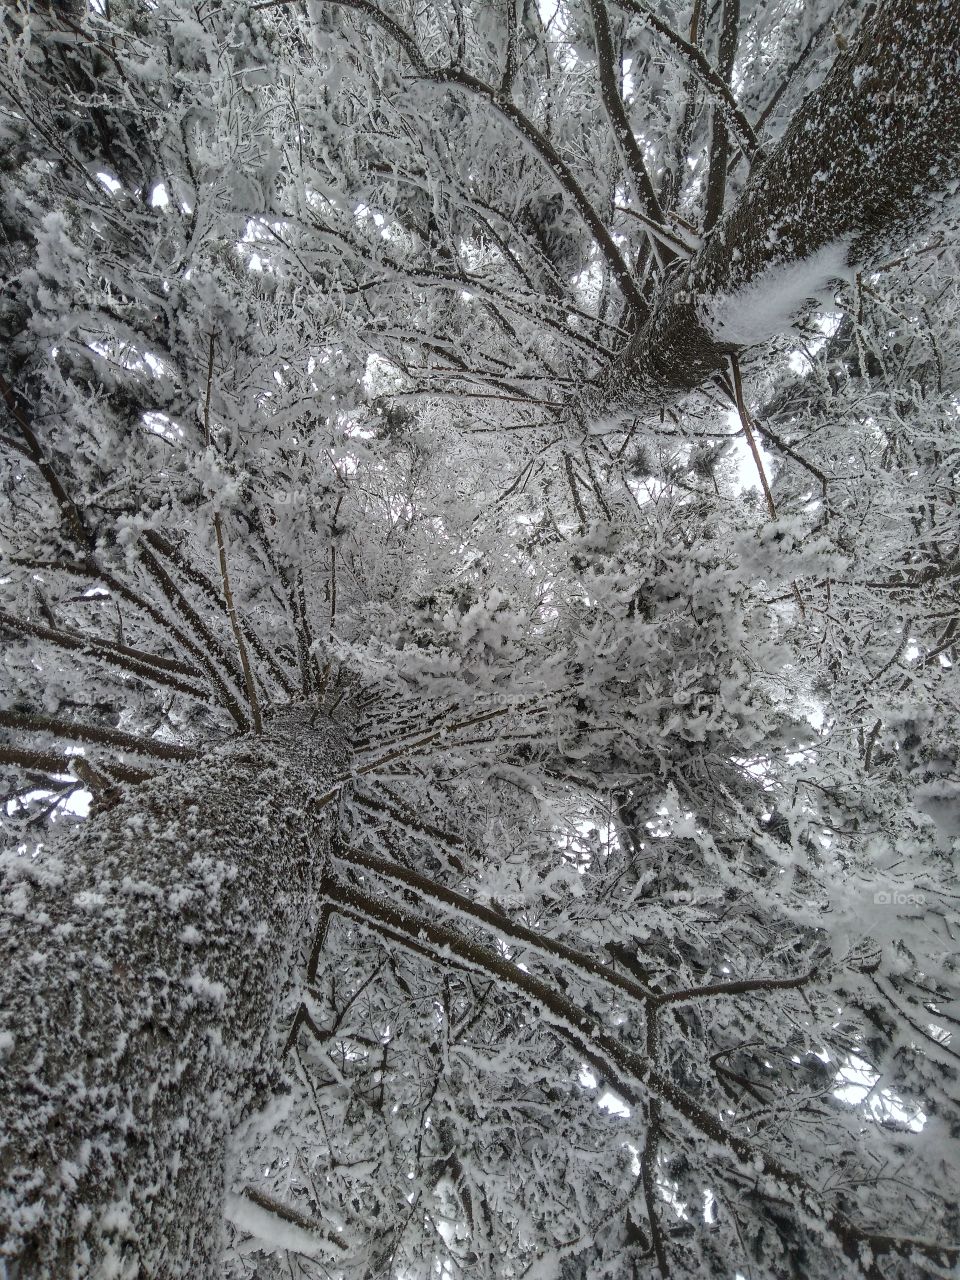 Magical trees in beautiful winter.